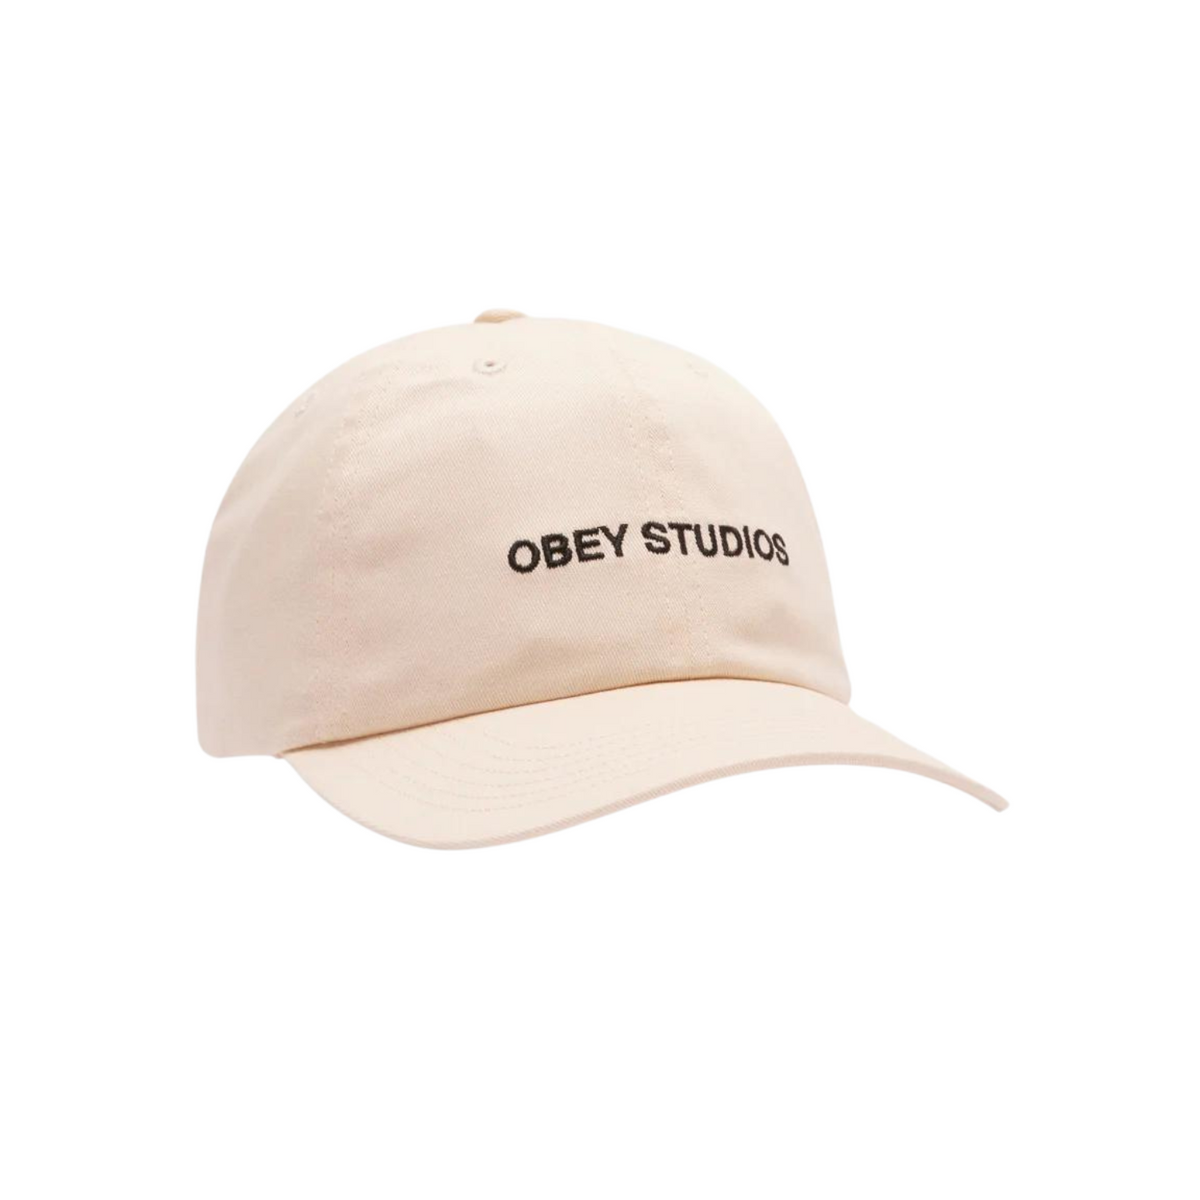 OBEY STUDIOS STRAP BACK HAT - UNBLEACHED